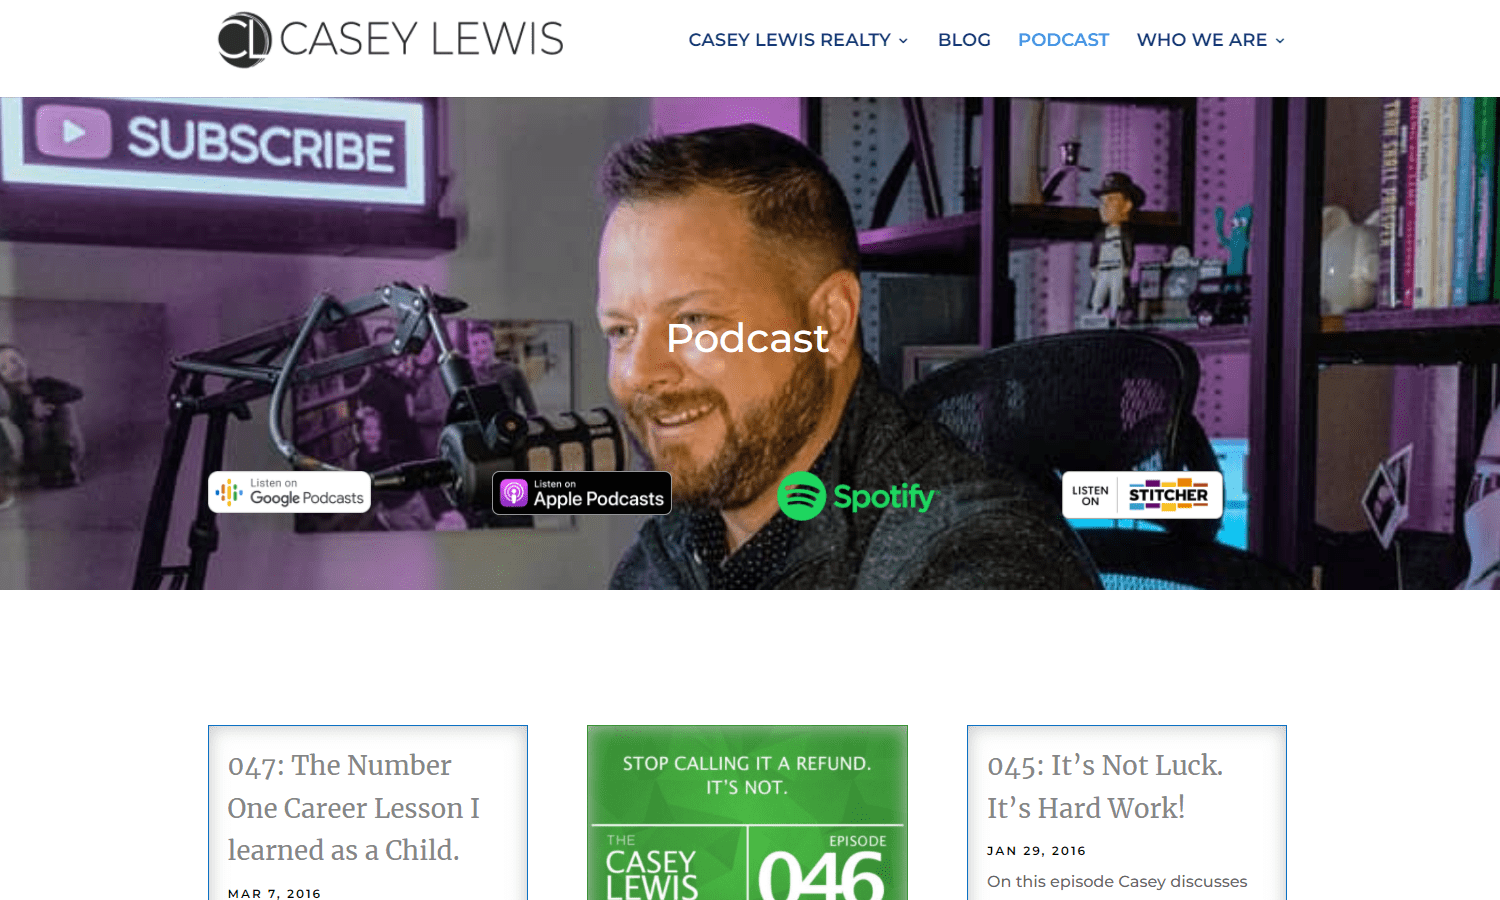 Casey Lewis Realty Website Design - Podcast